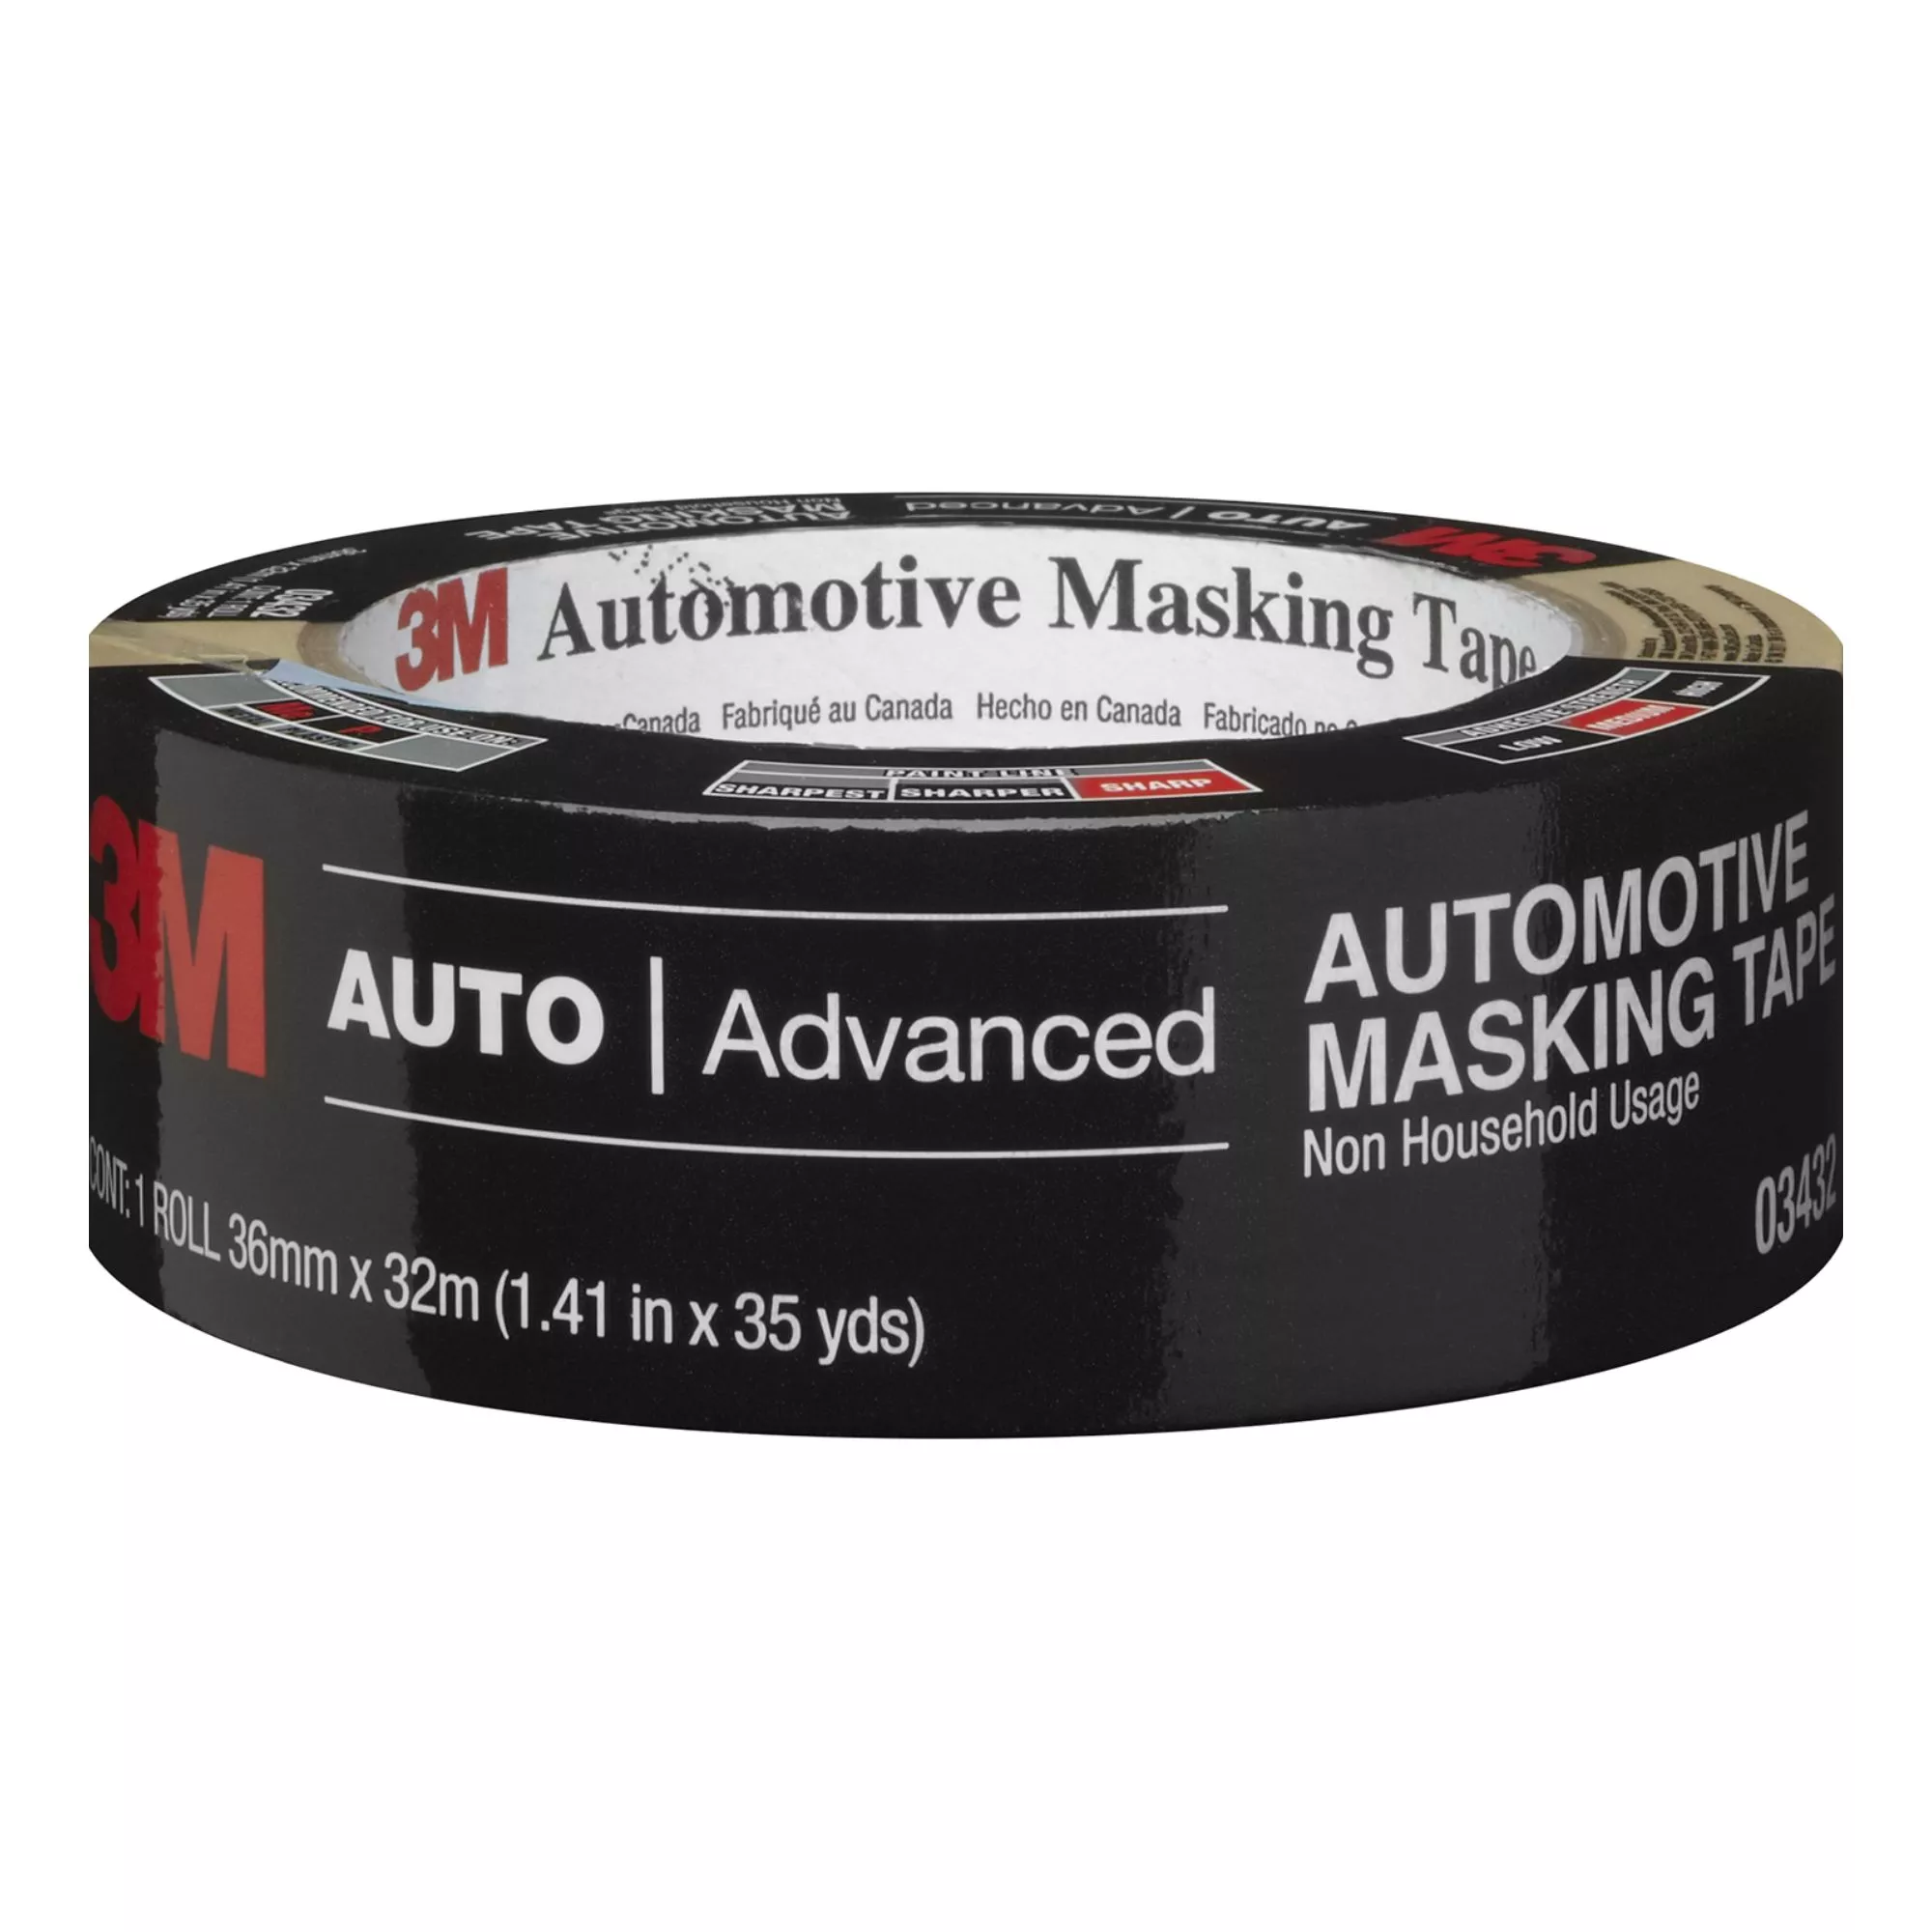 SKU 7000119995 | 3M™ Automotive Masking Tape